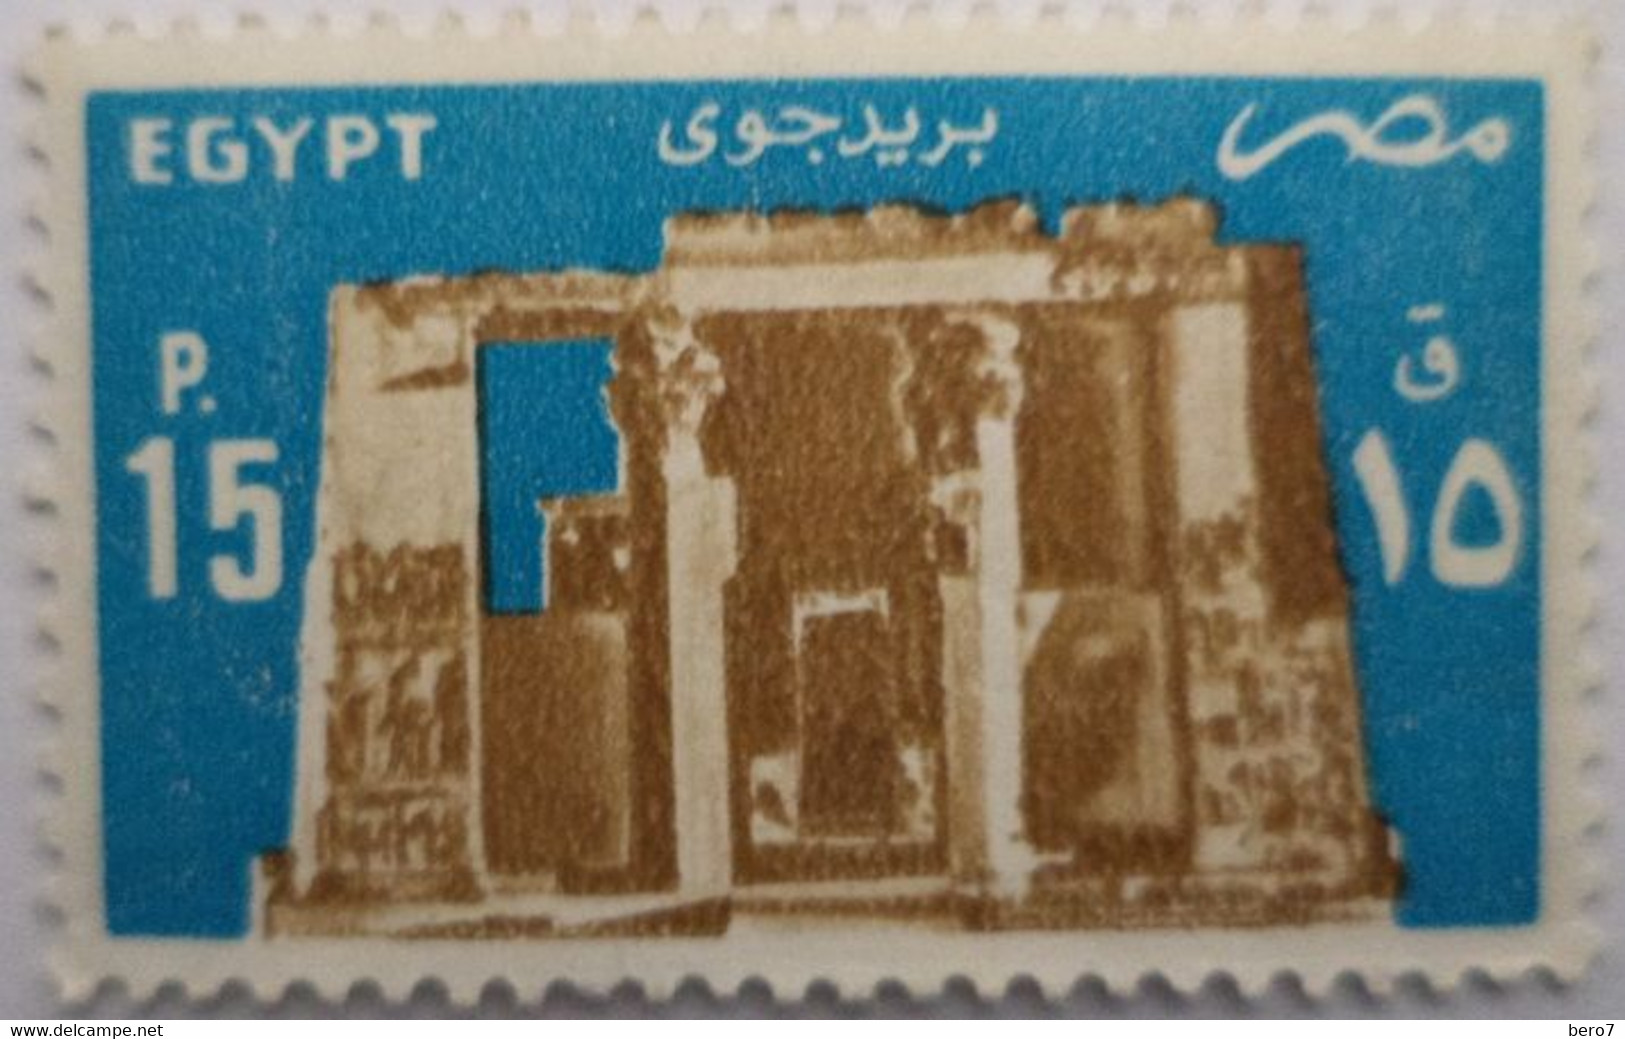 EGYPT- 1985 - Temple Of Horus, Edfu [MNH] (Egypte) (Egitto) (Ägypten) - Usados